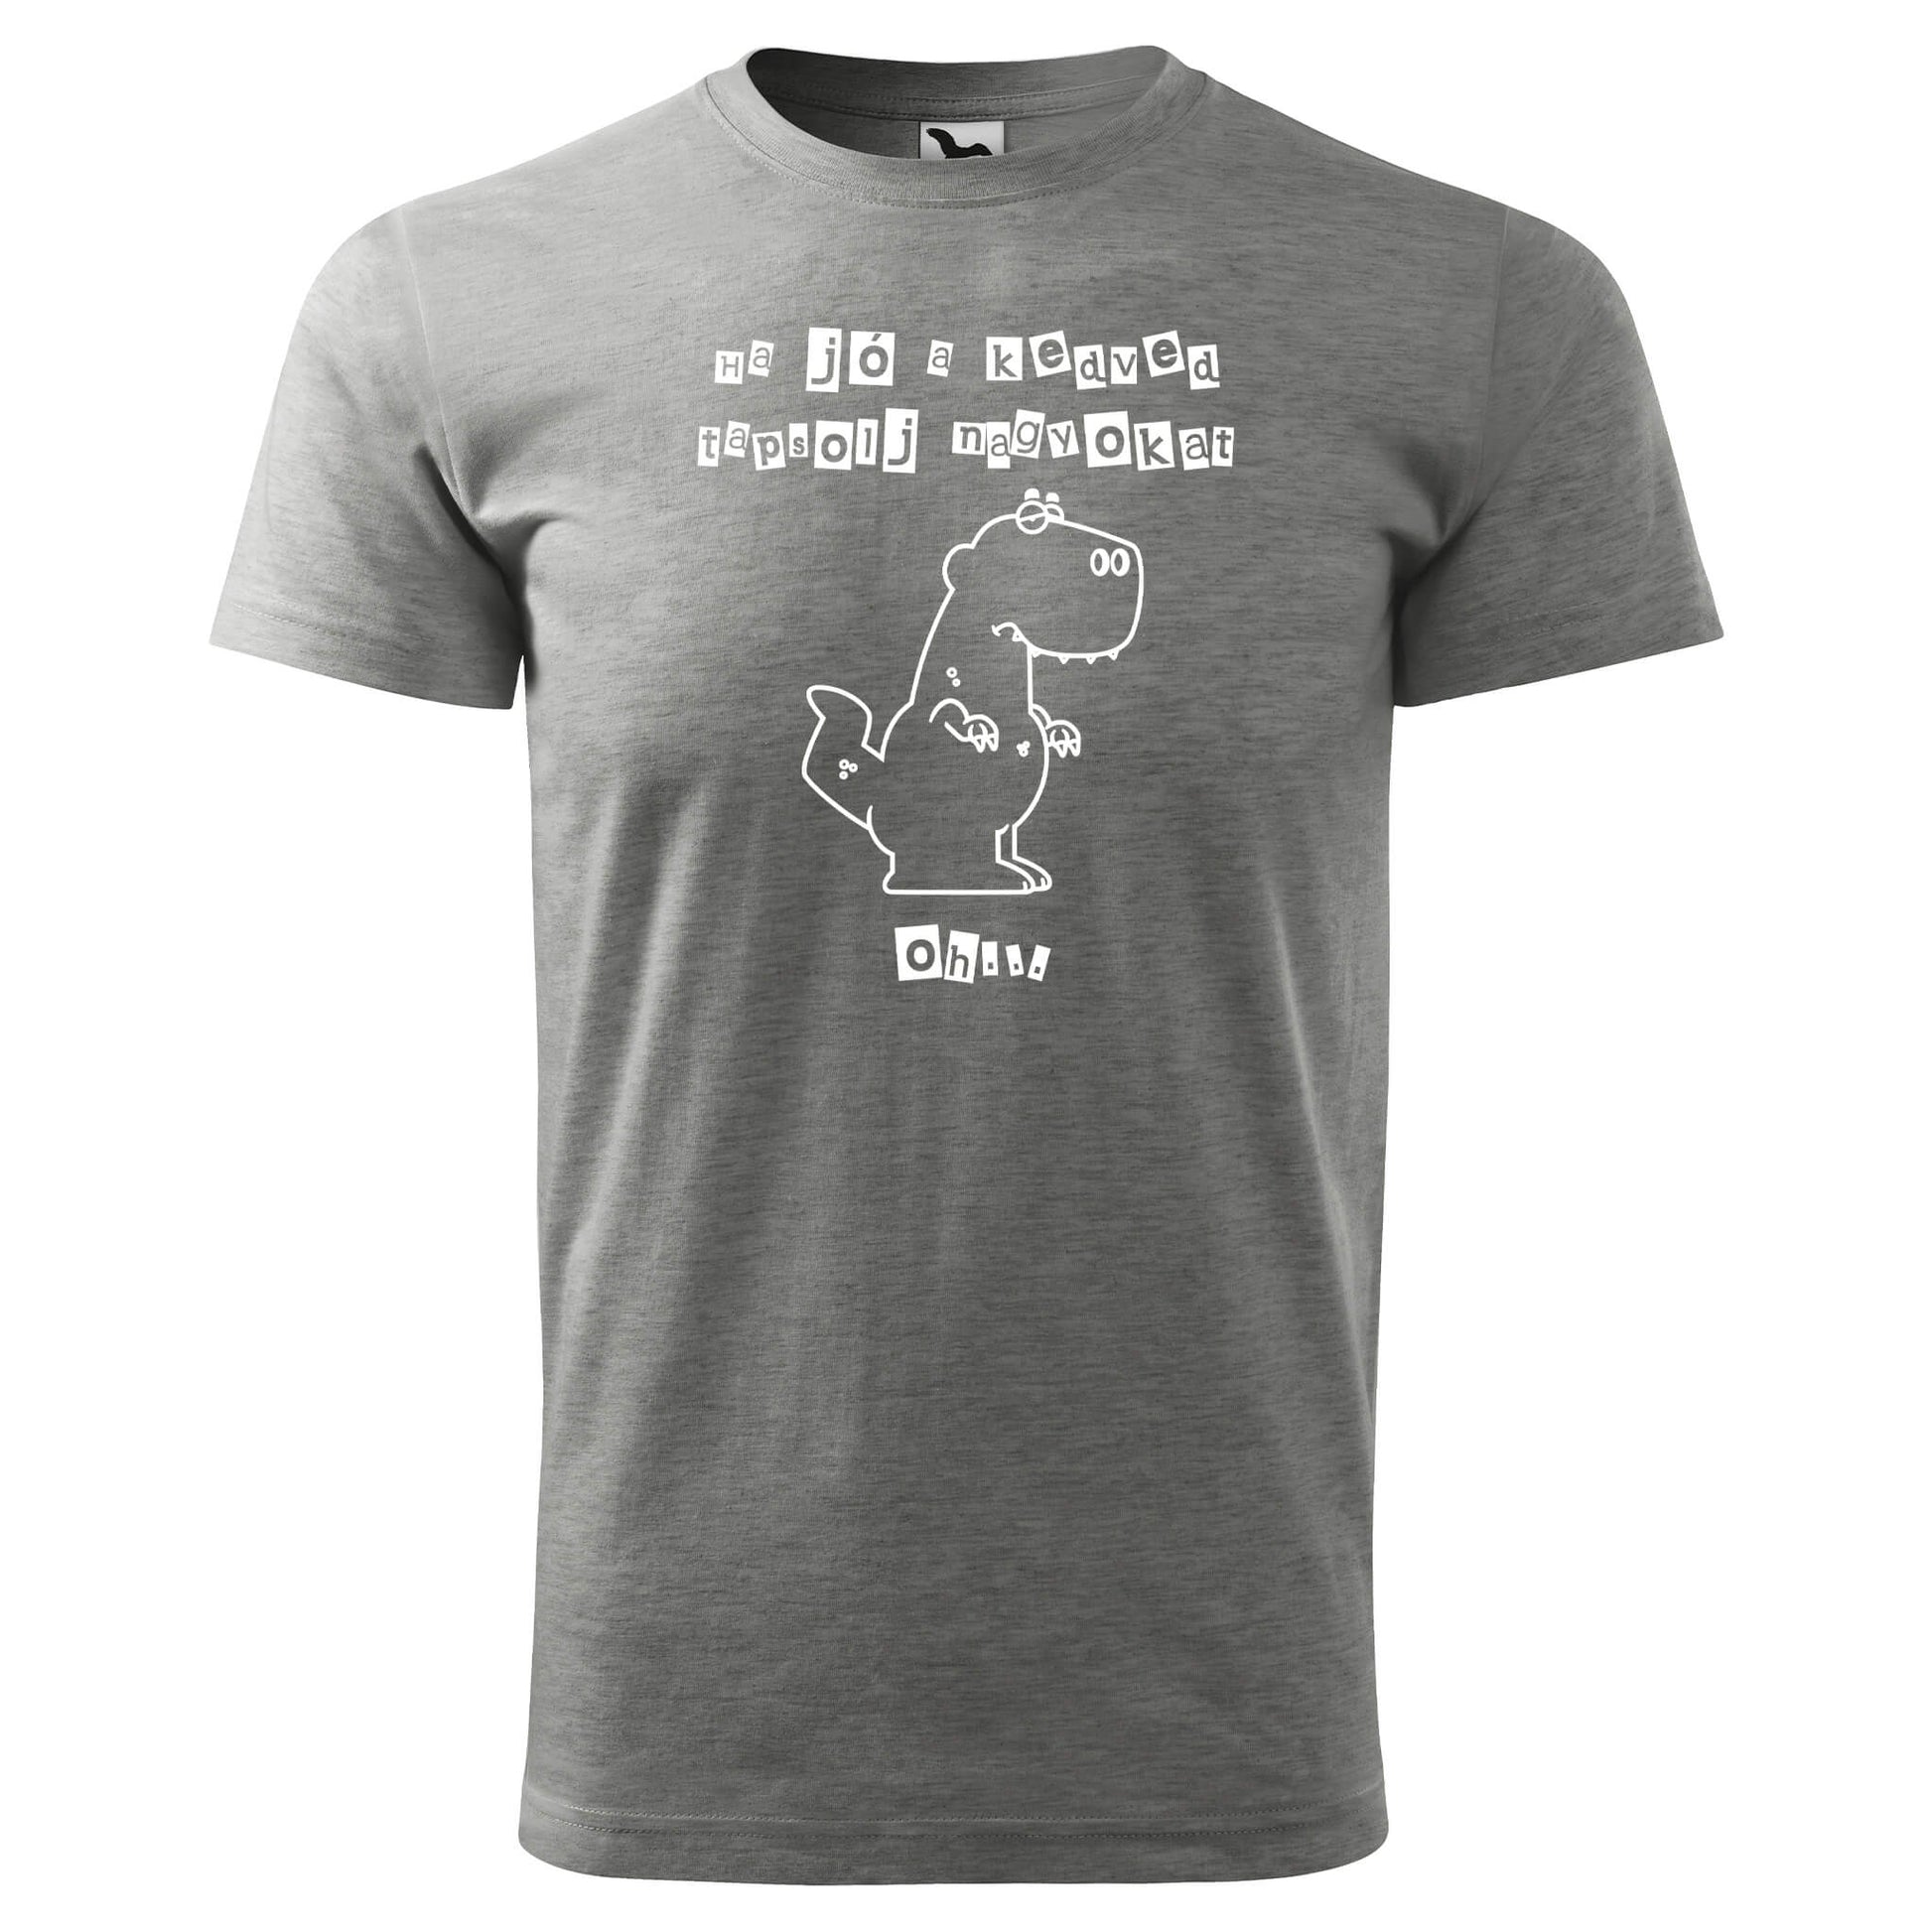 T-shirt - Ha jó a kedved tapsolj nagyokat - rvdesignprint